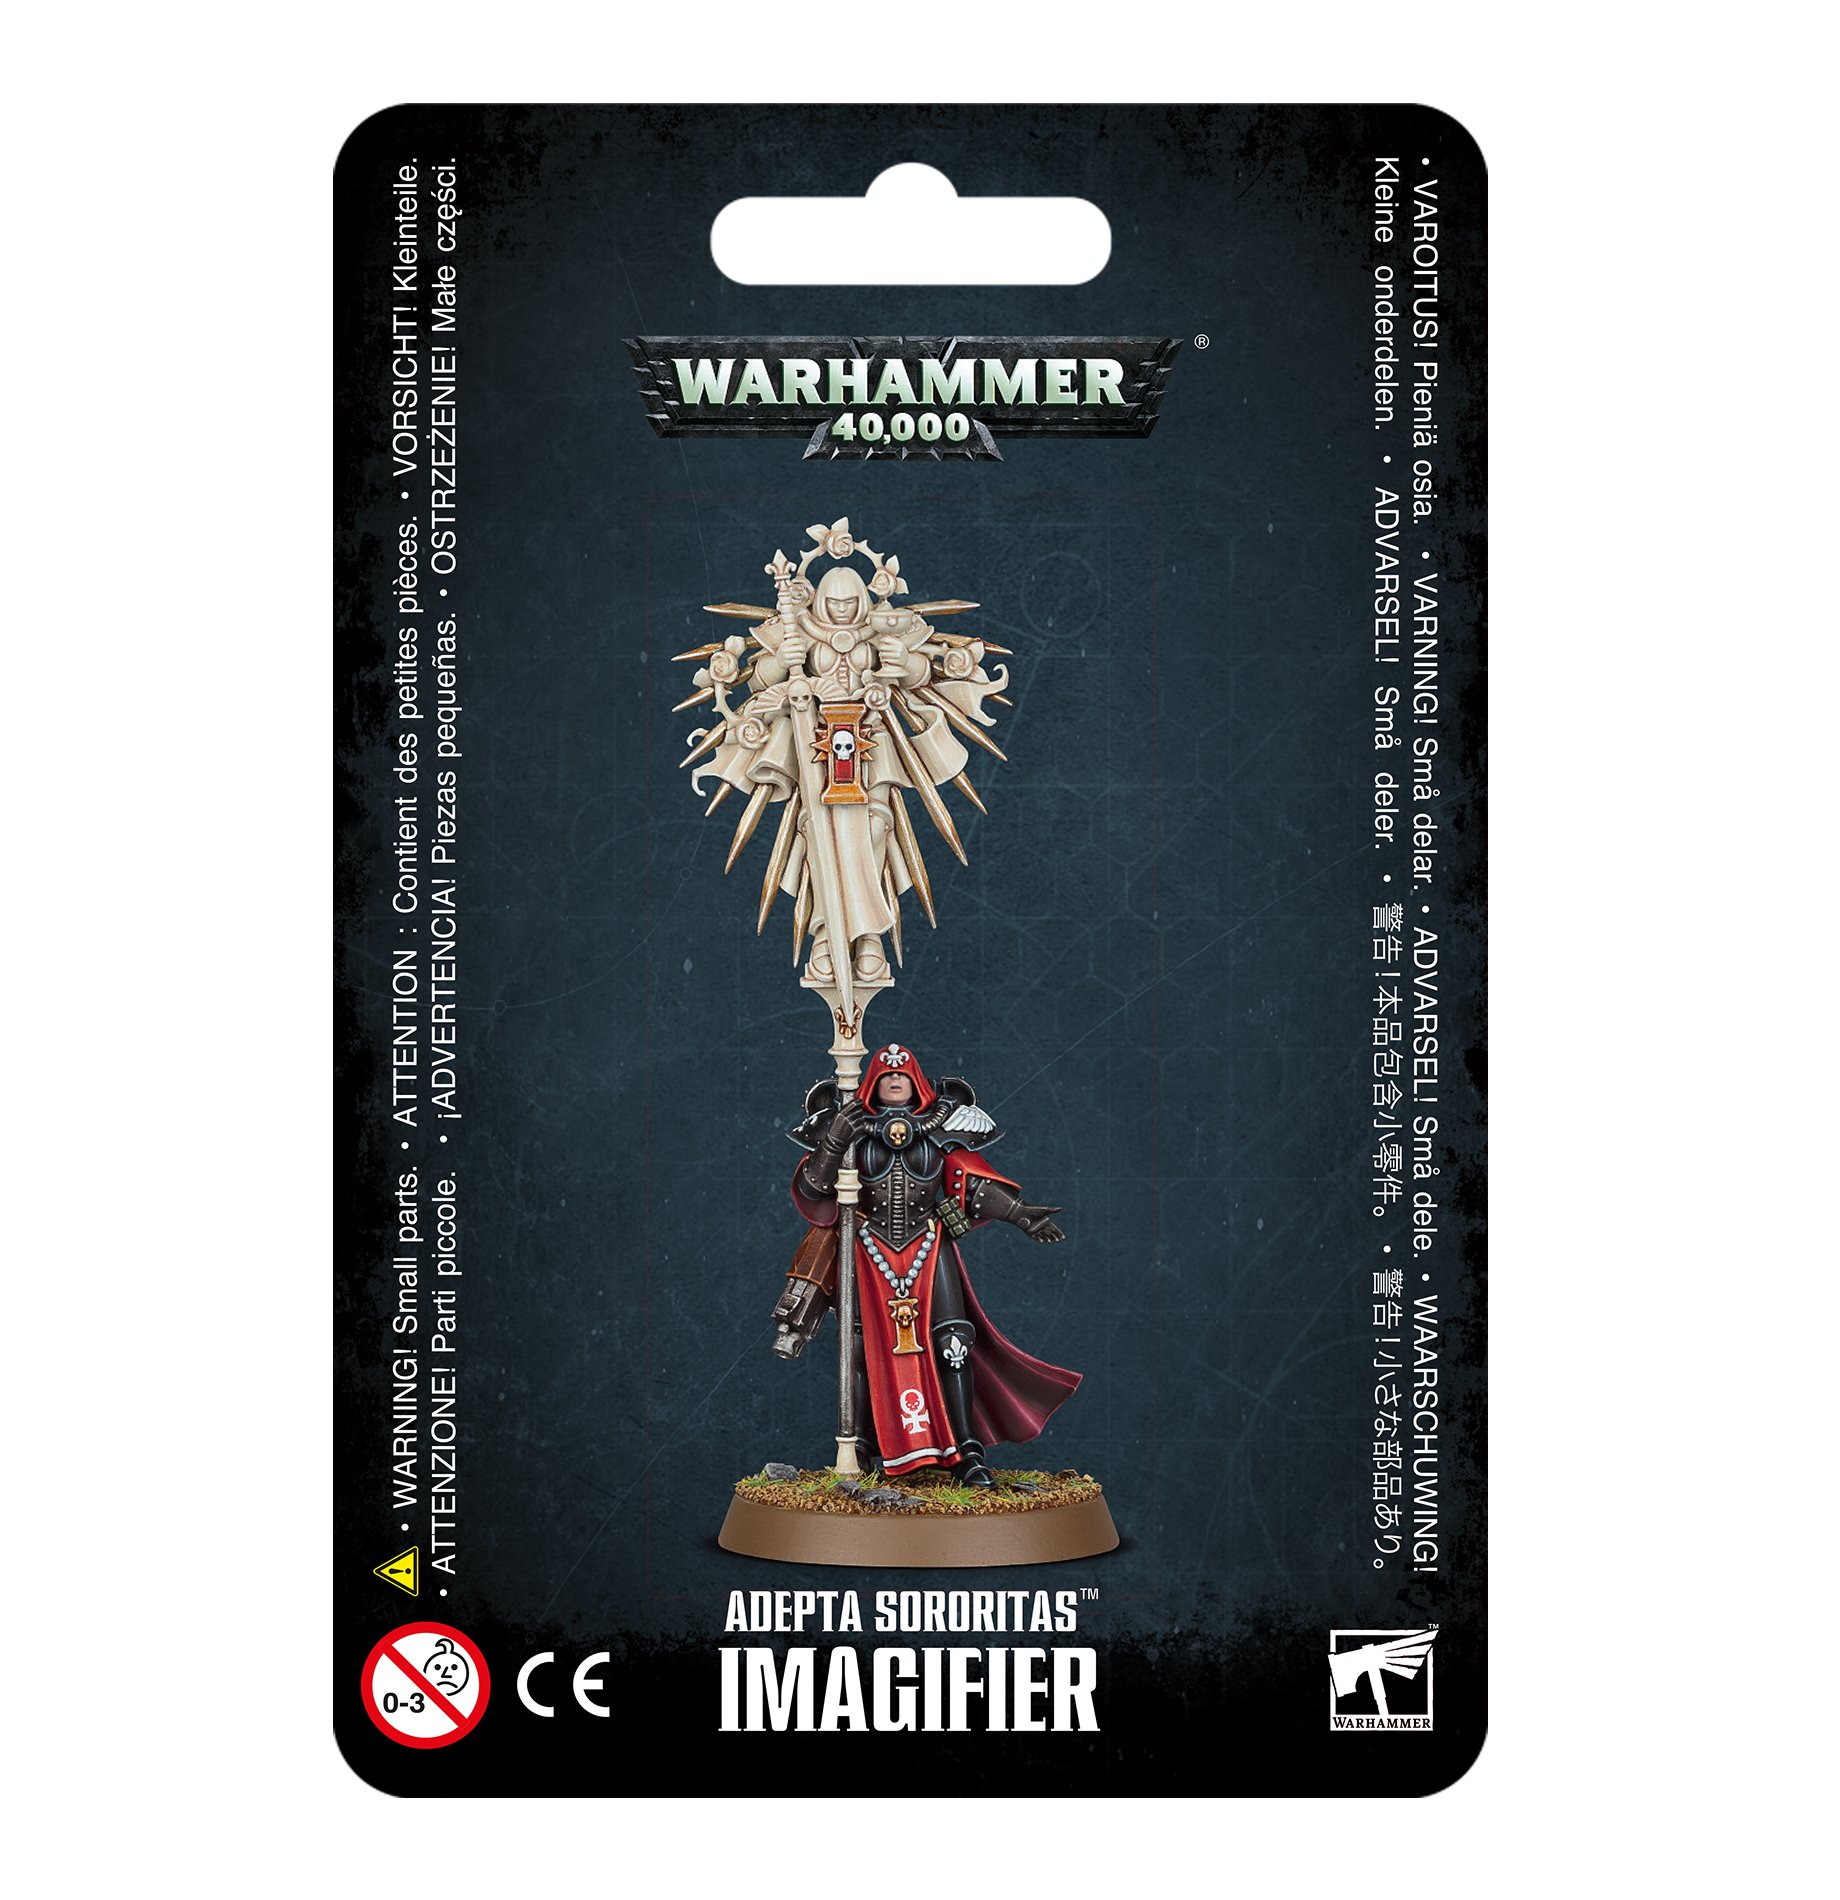 Imagifier - 52-15 - Adepta Sororitas - Warhammer 40.000